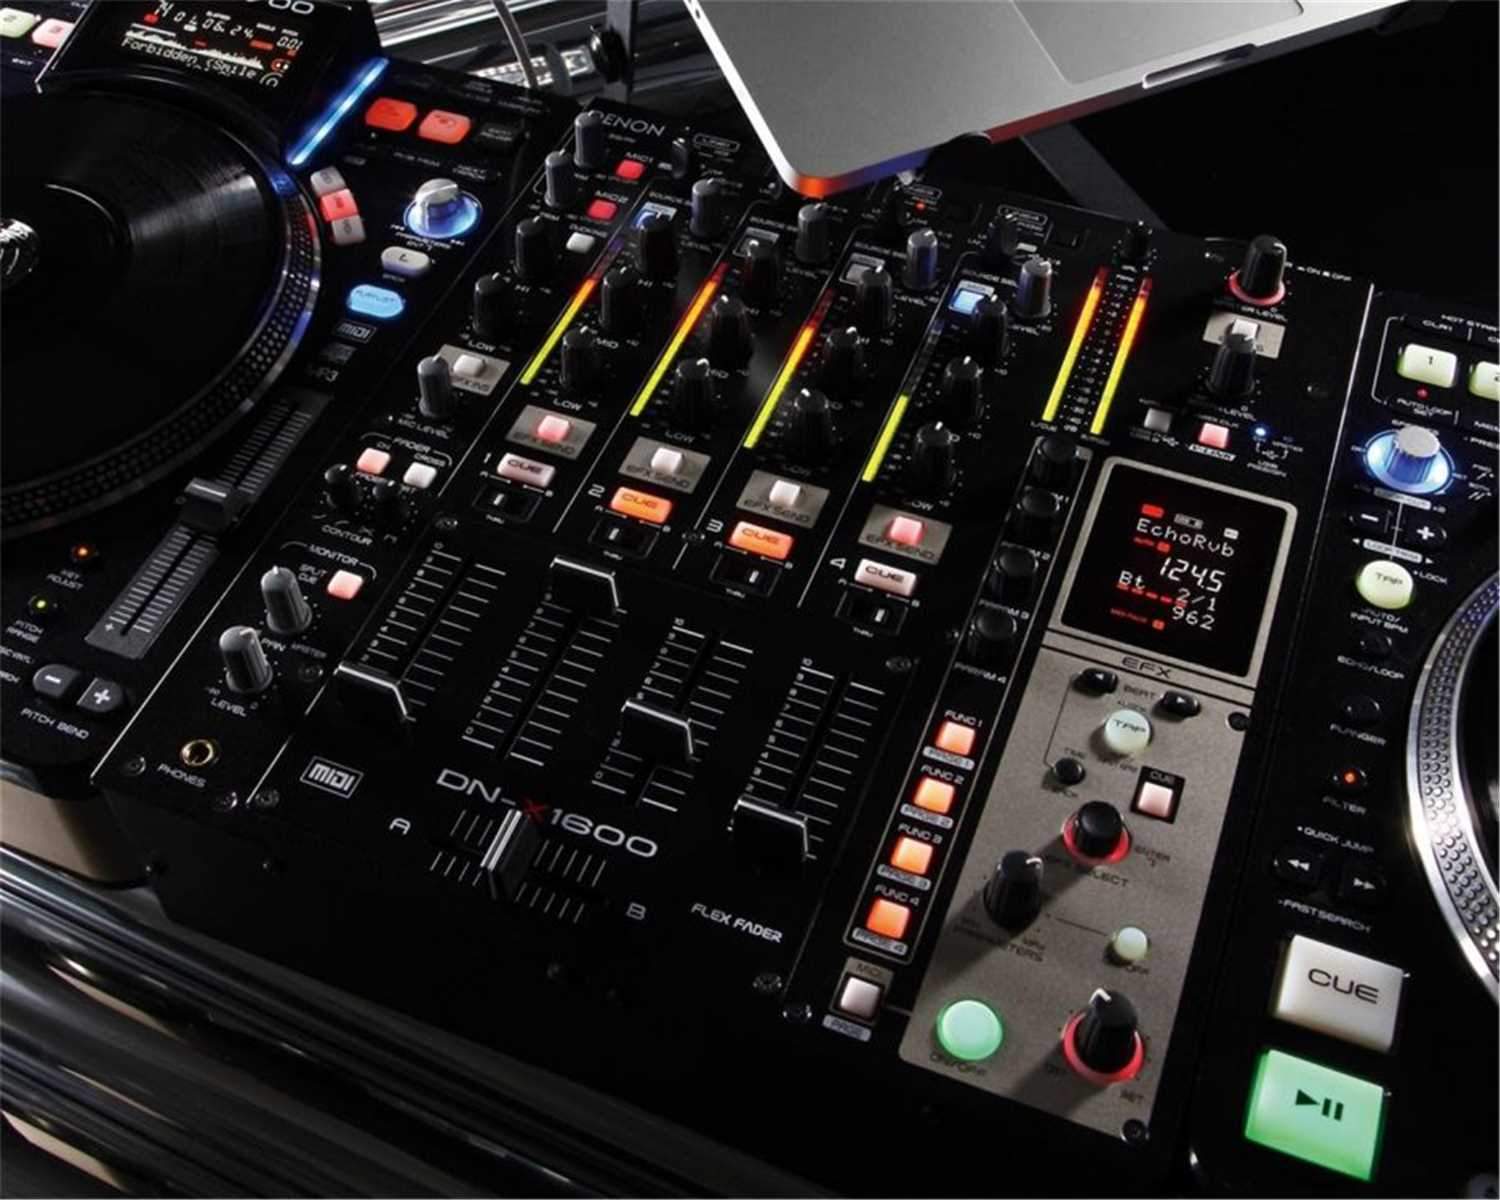 Denon DJ DN-X1600 4-Channel Digital DJ Mixer - ProSound and Stage Lighting